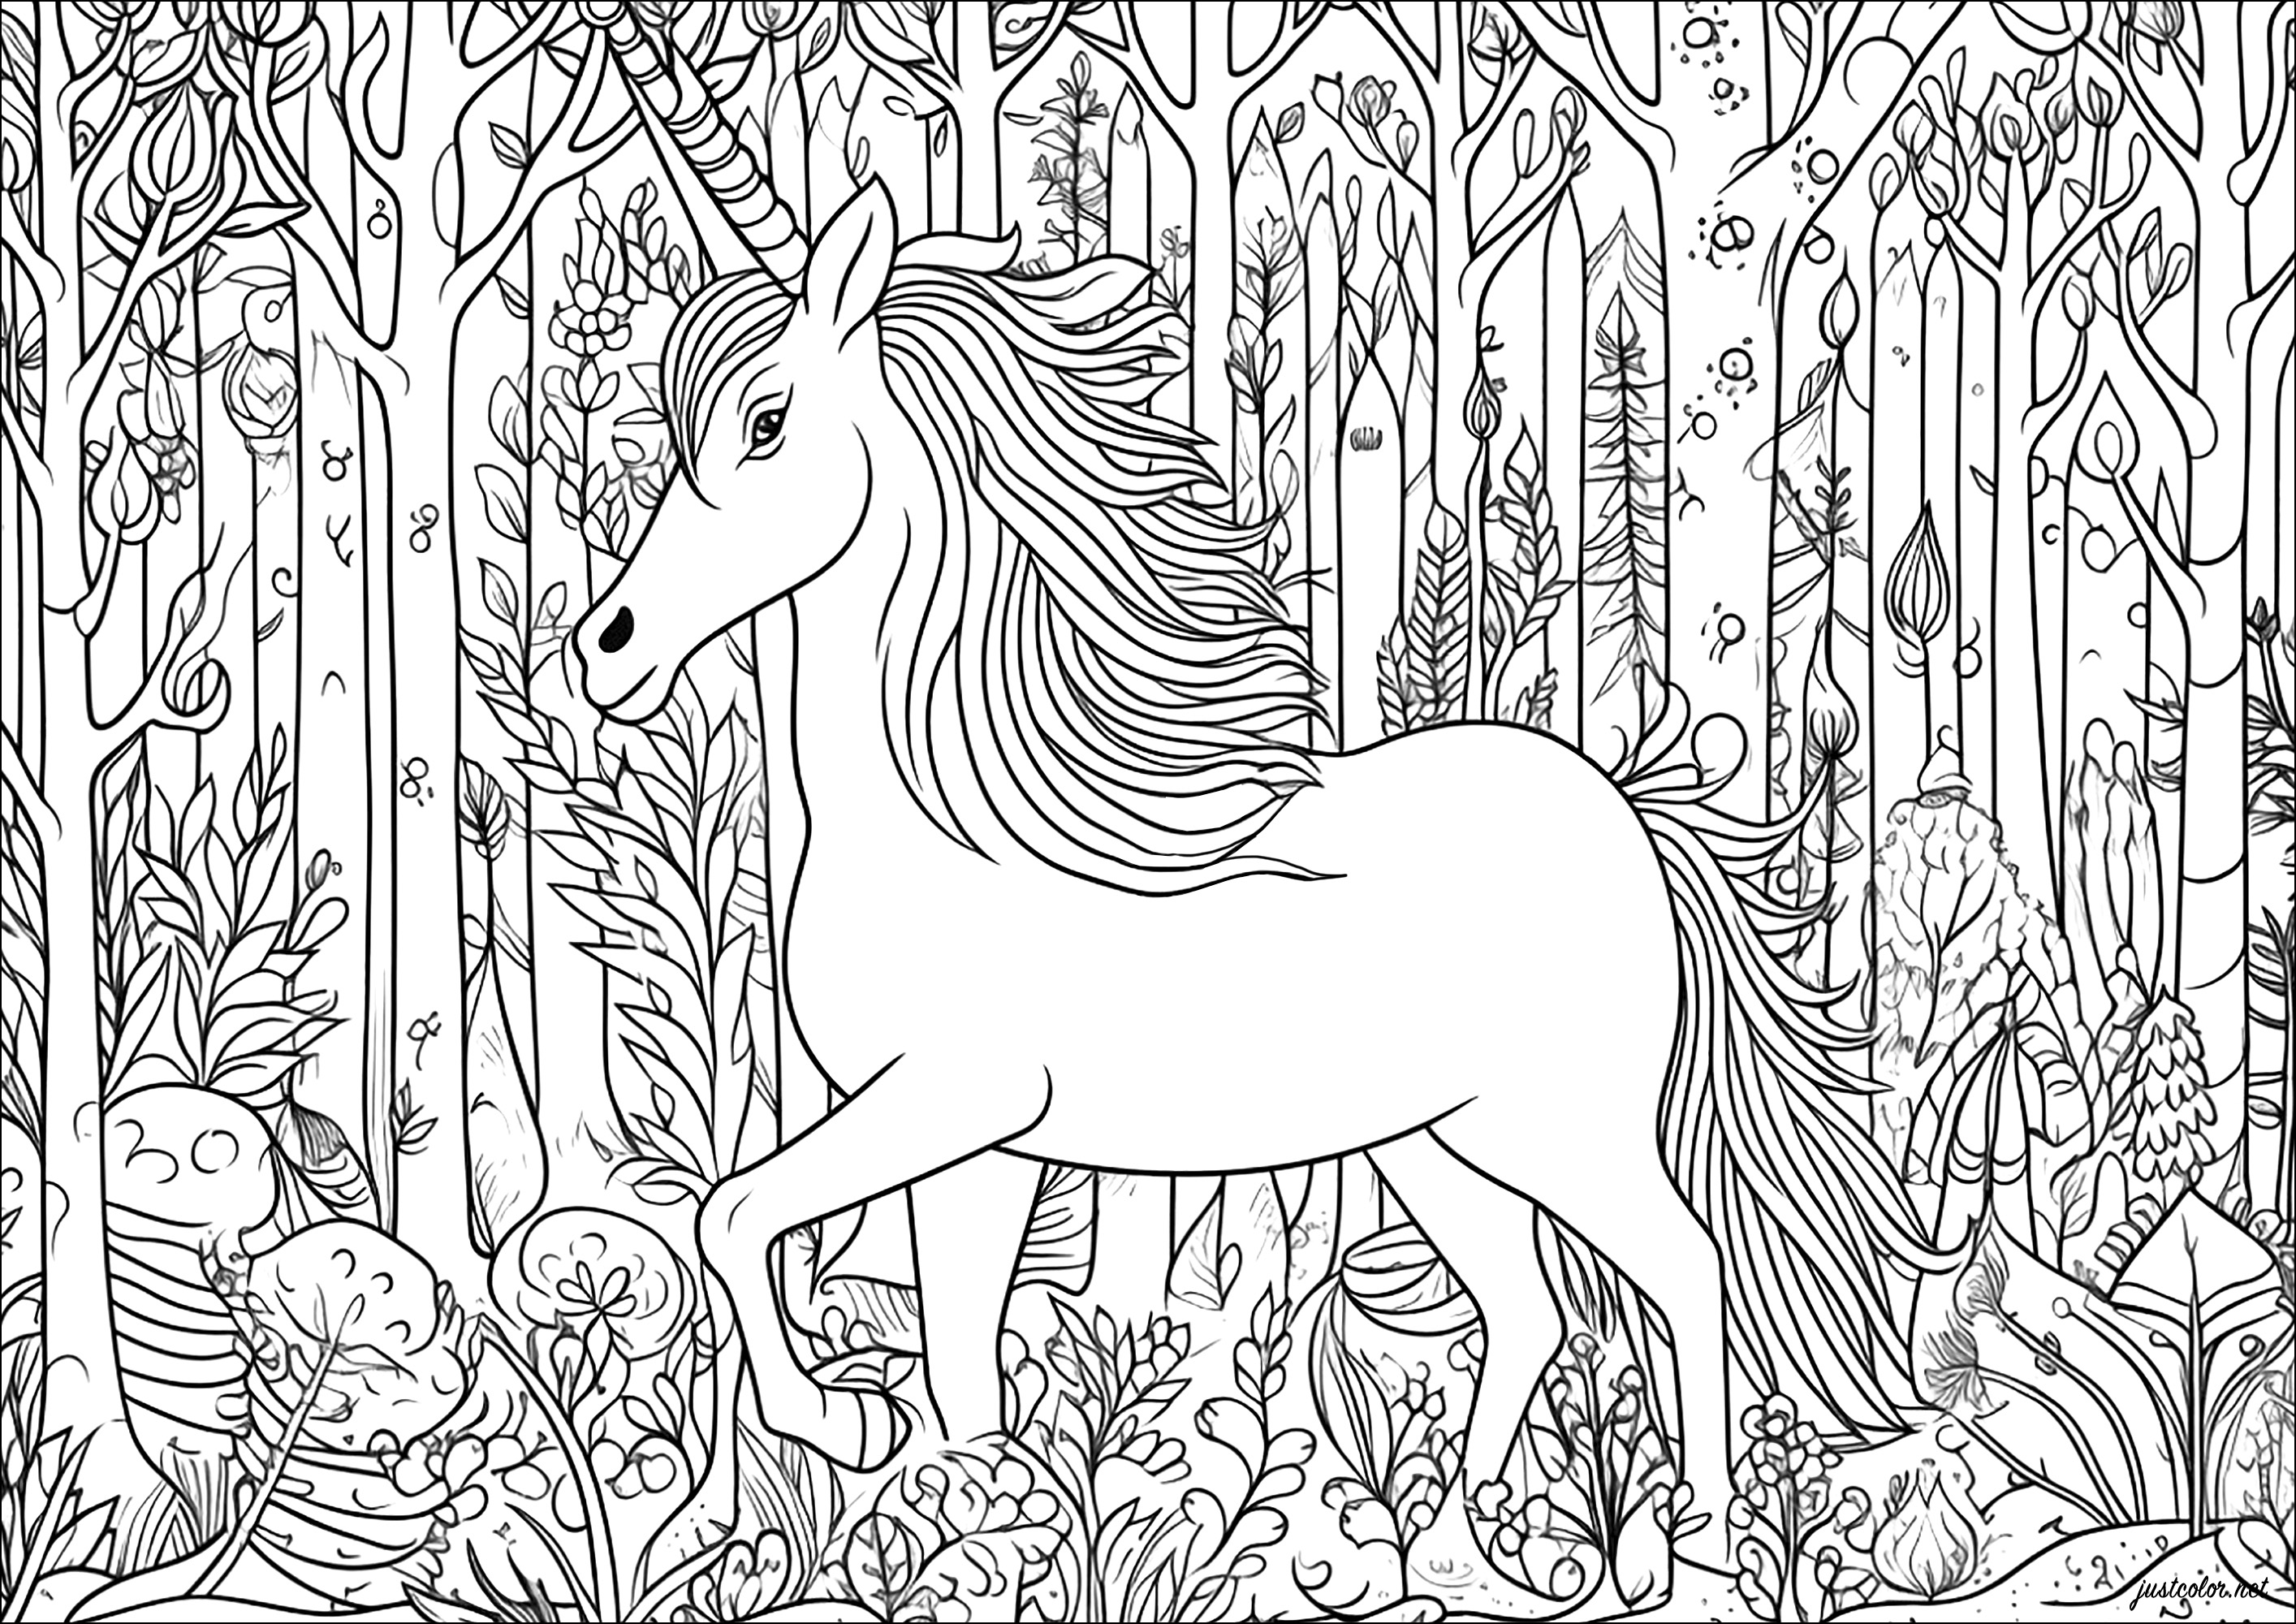 Majestic unicorn, advancing through a forest